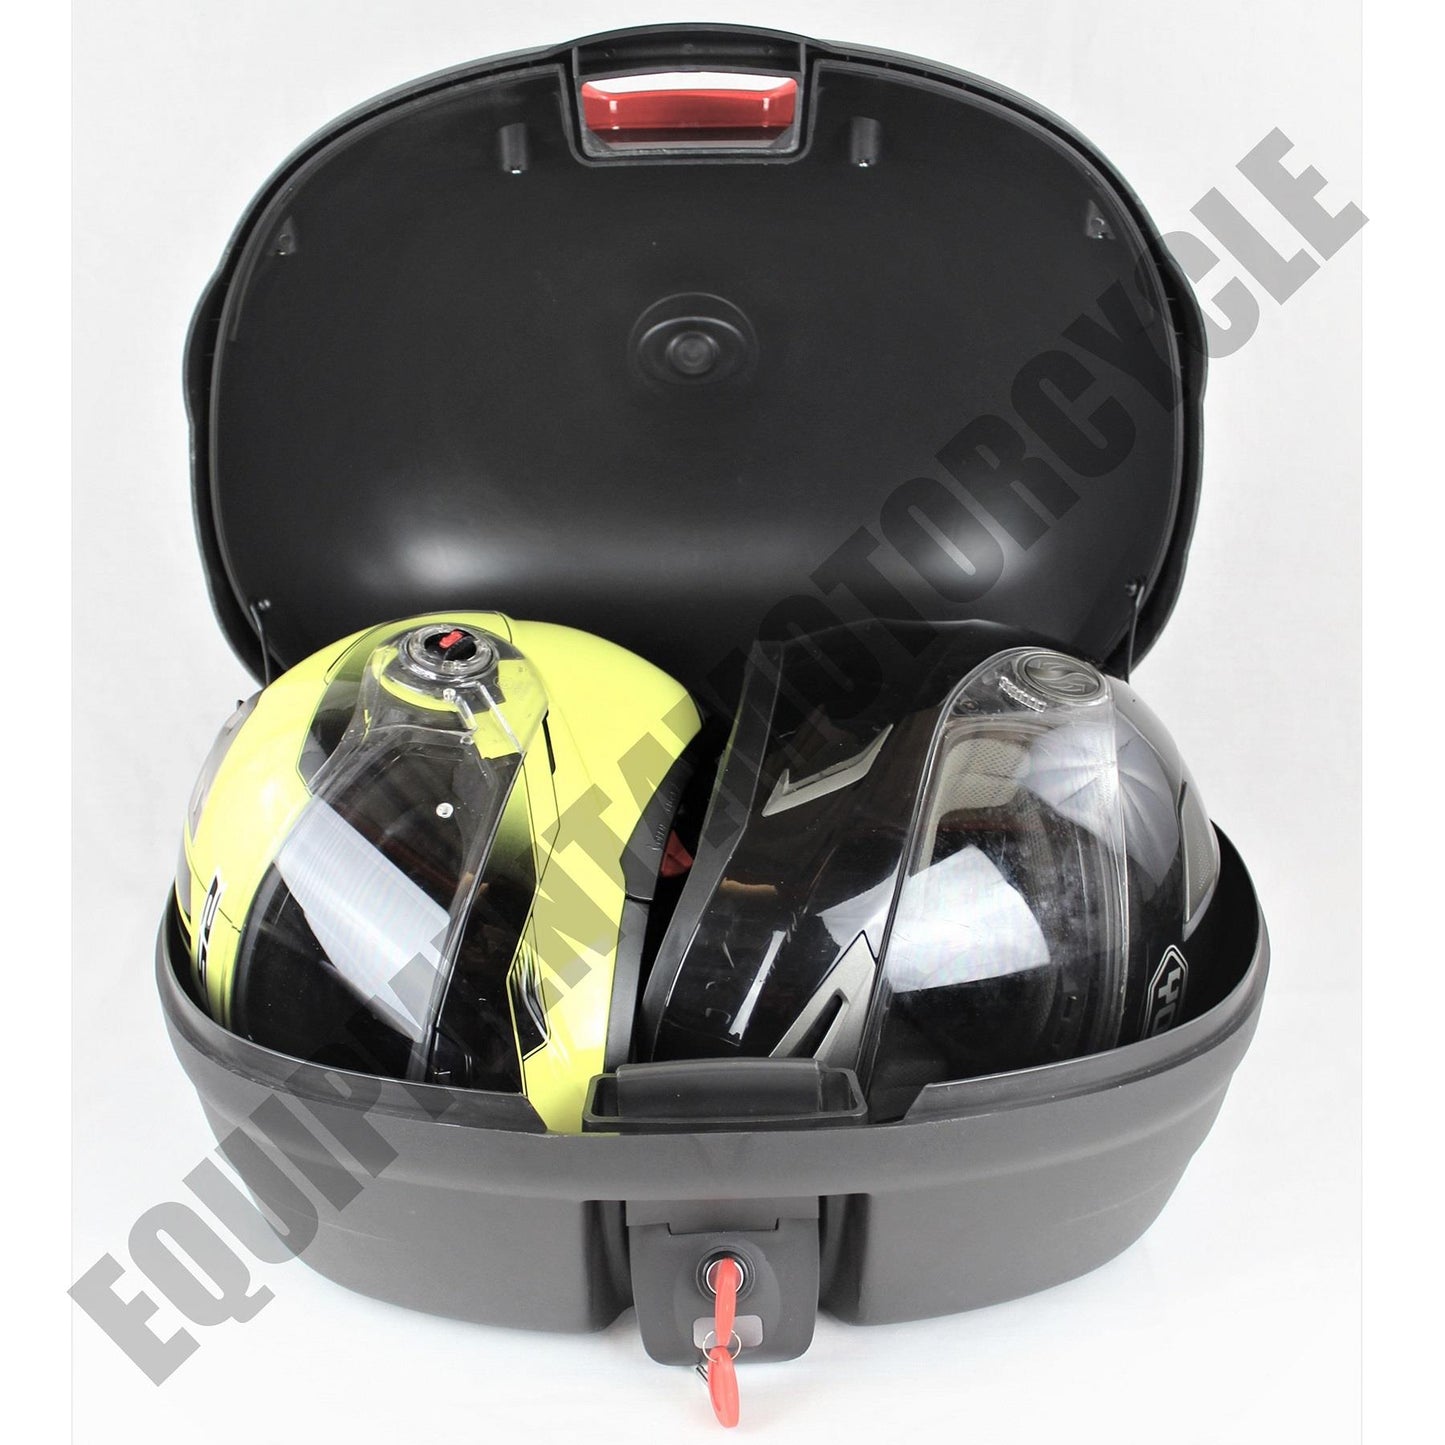 KTM DUKE rear rack luggage carrier + 46 LT TOP CASE SET  - ALL IN ONE